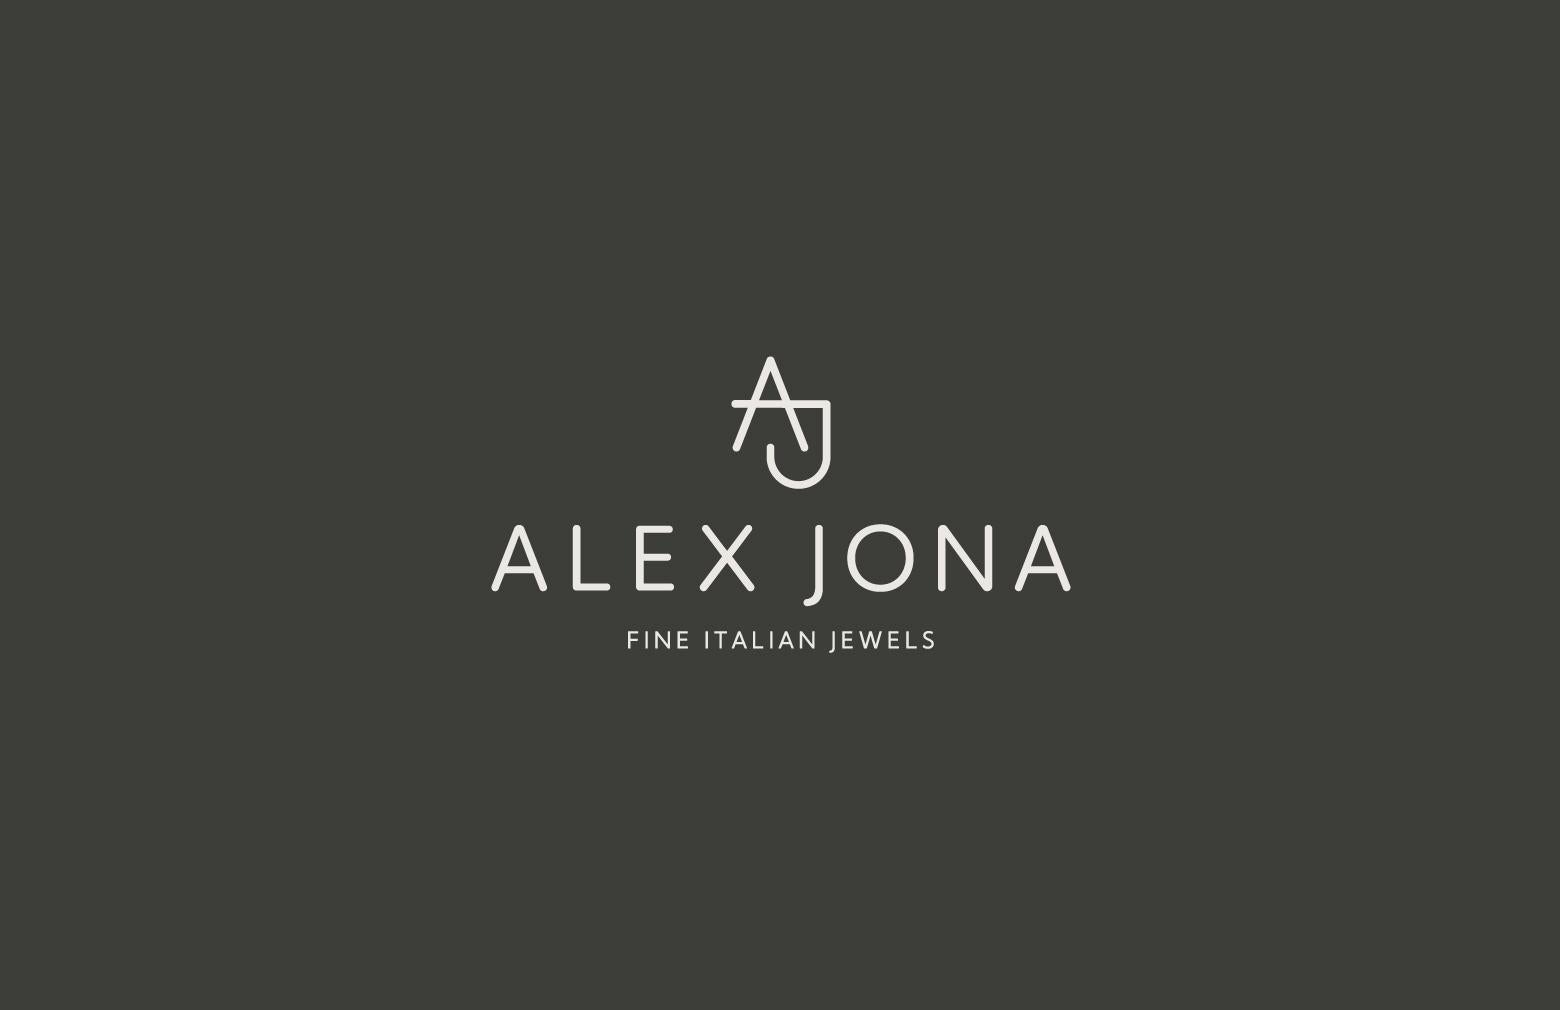 Alex Jona Rose Quartz Aquamarine Smoky Quartz Rondelle Necklace For Sale 4